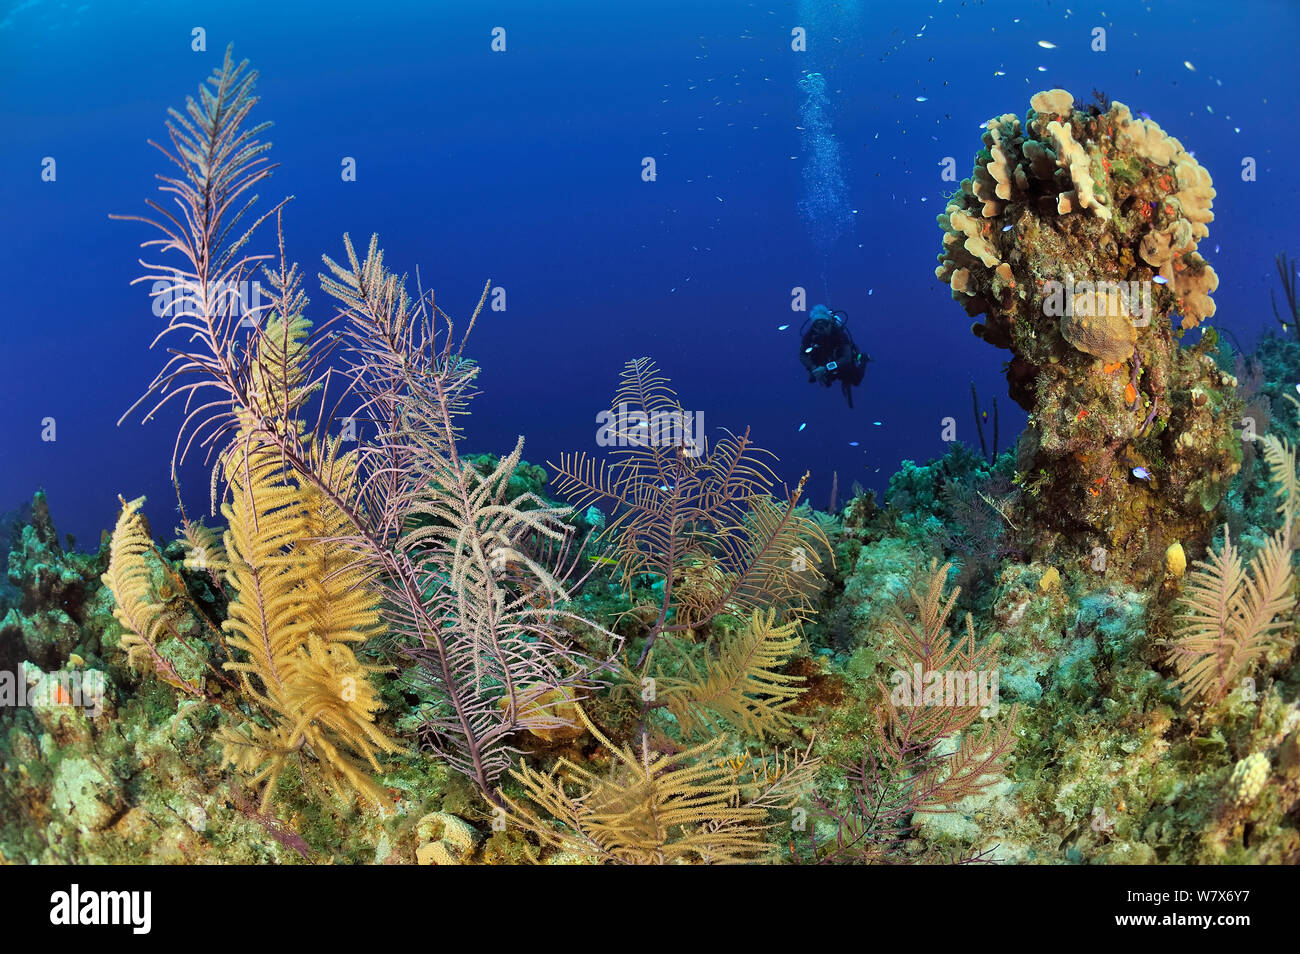 Taucher an Korallenriff mit Bipinnate Meer plumes (Pseudopterogorgia bipinnata), andere Meer plumes (Pseudopterogorgia) und Korallen, San Salvador/Colombus Island, Bahamas. Karibik. Juni 2013. Stockfoto